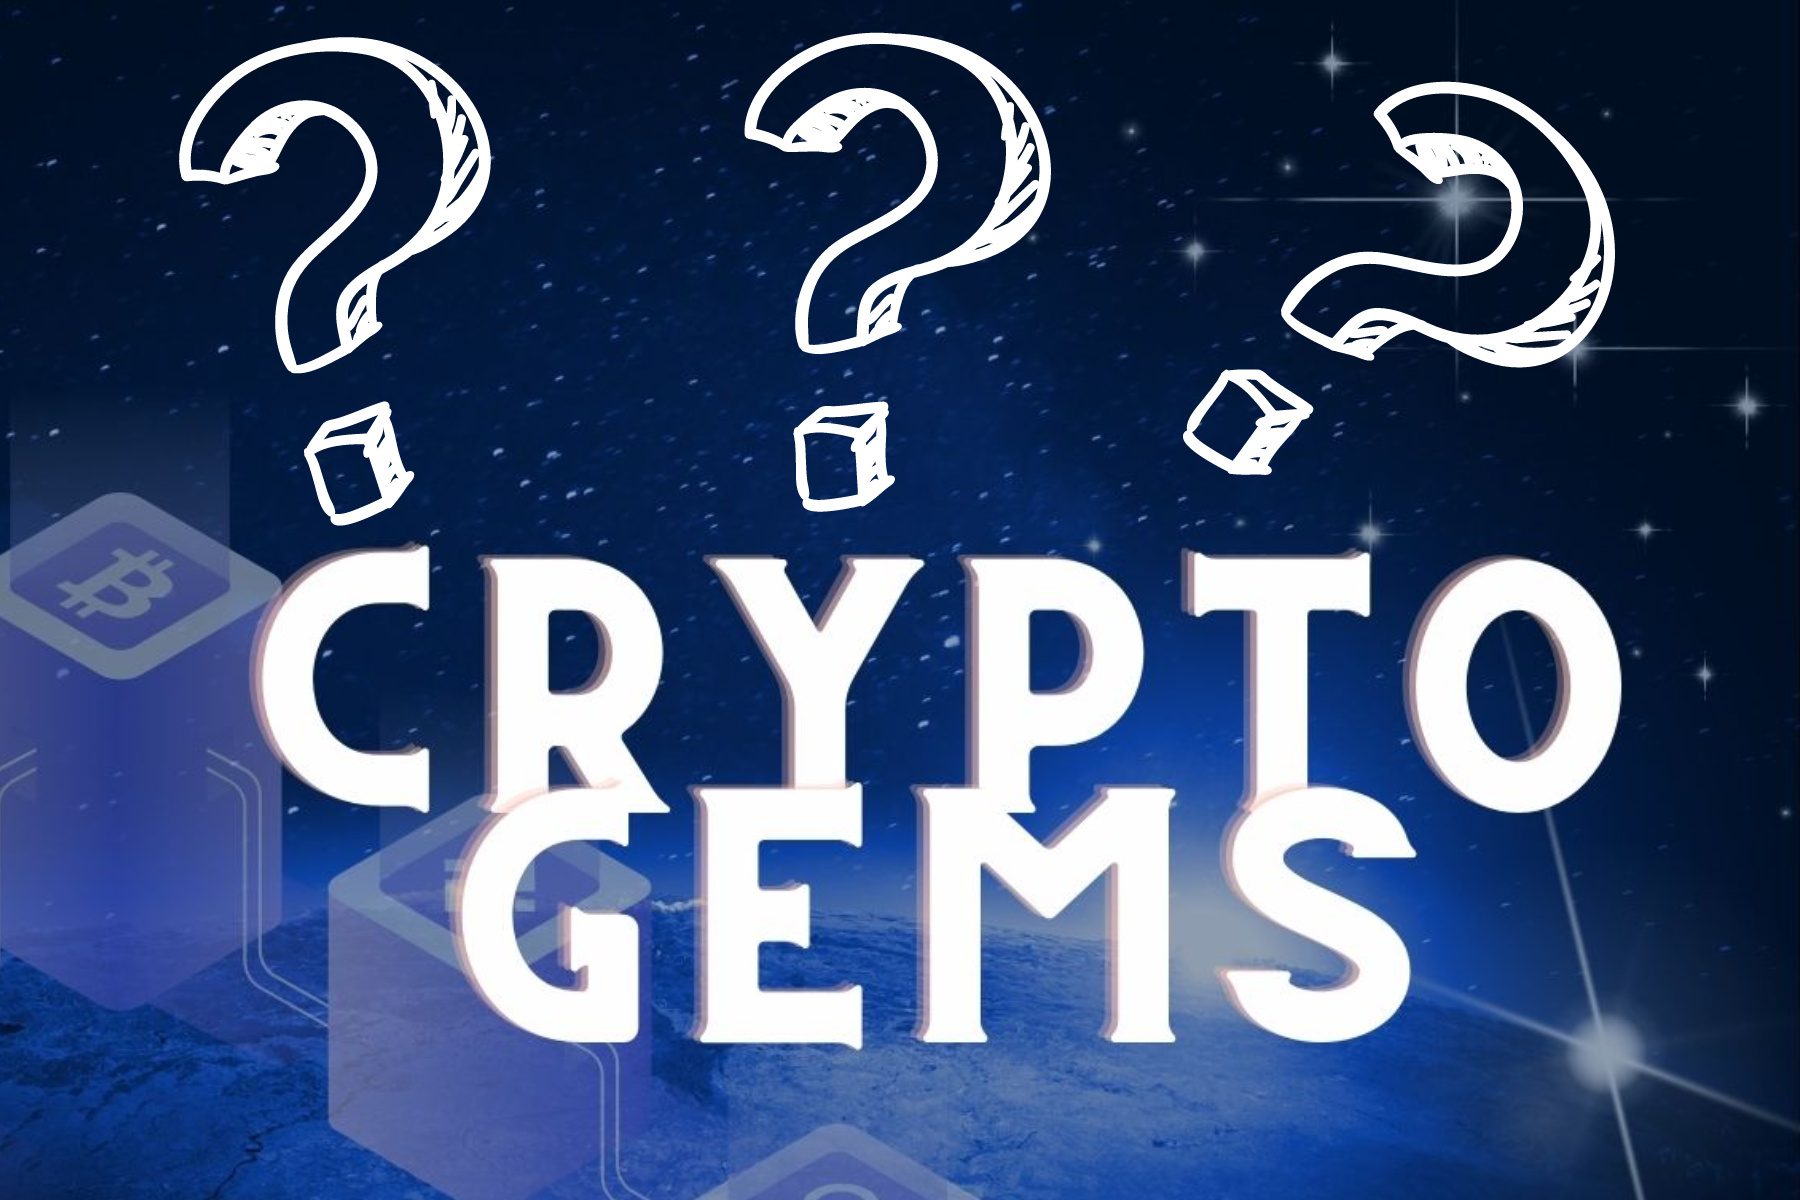 "Crypto Gems" followed by three question marks